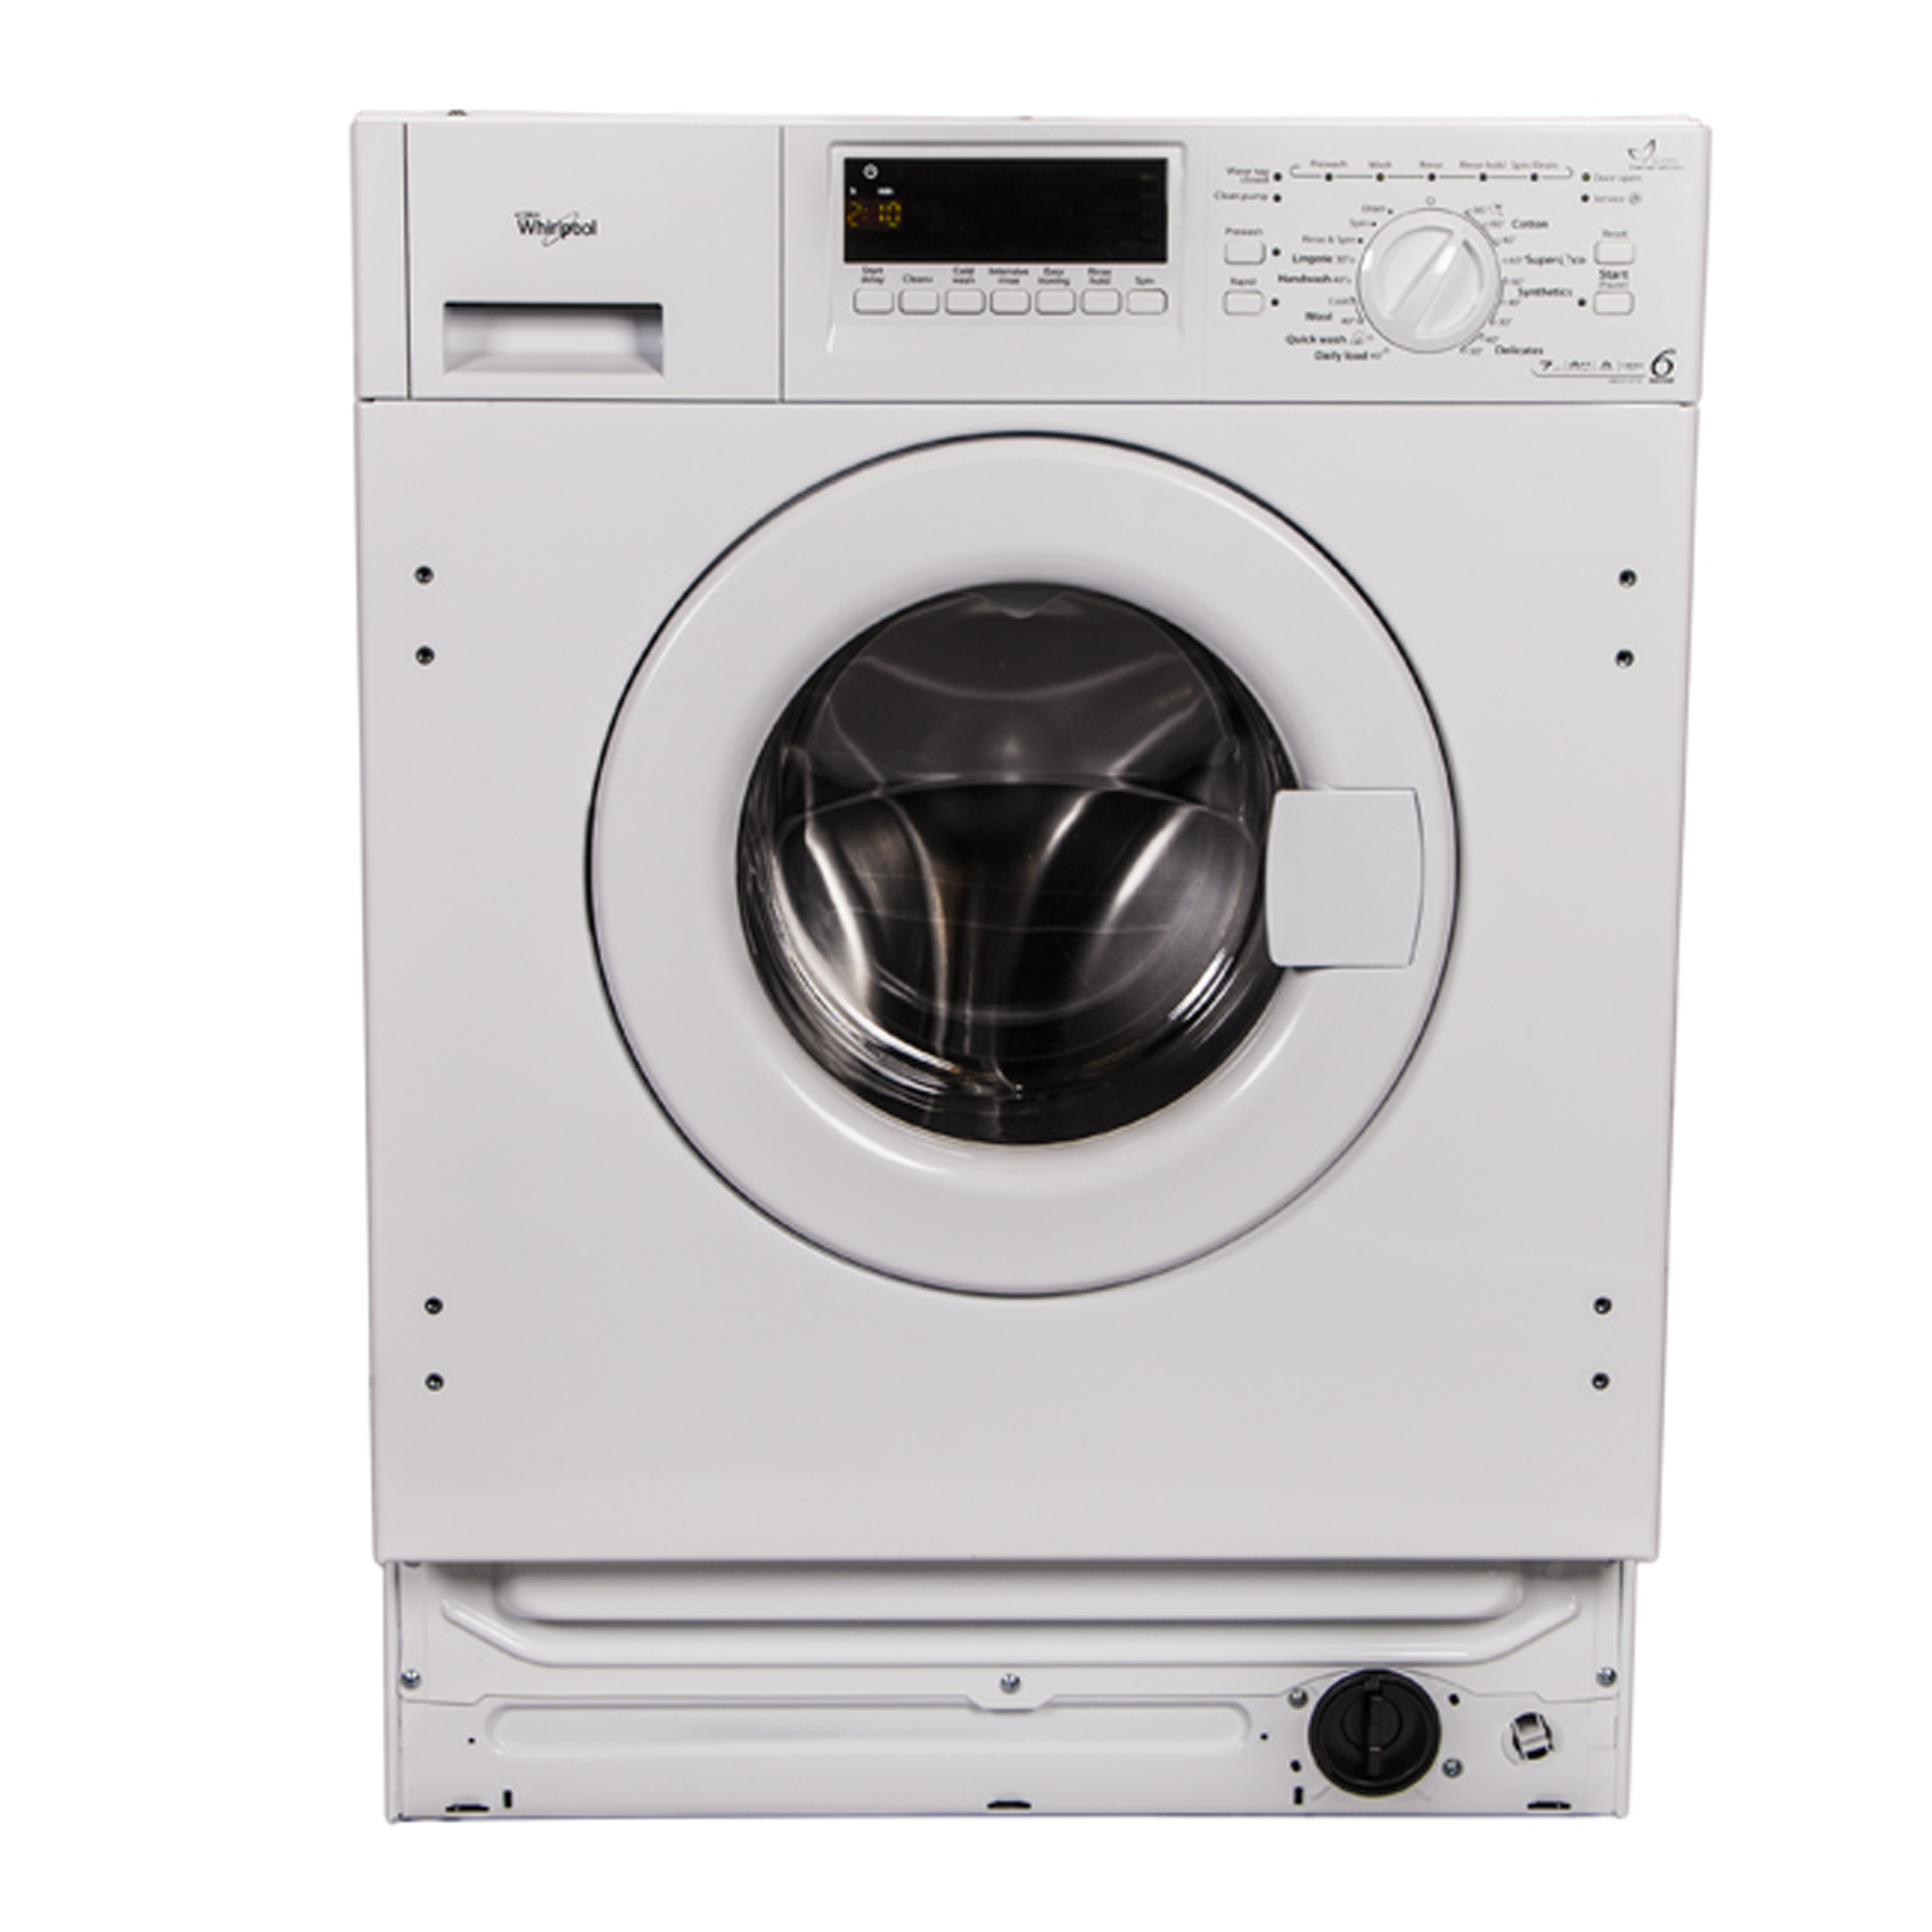 Whirlpool Washing Machine Manual